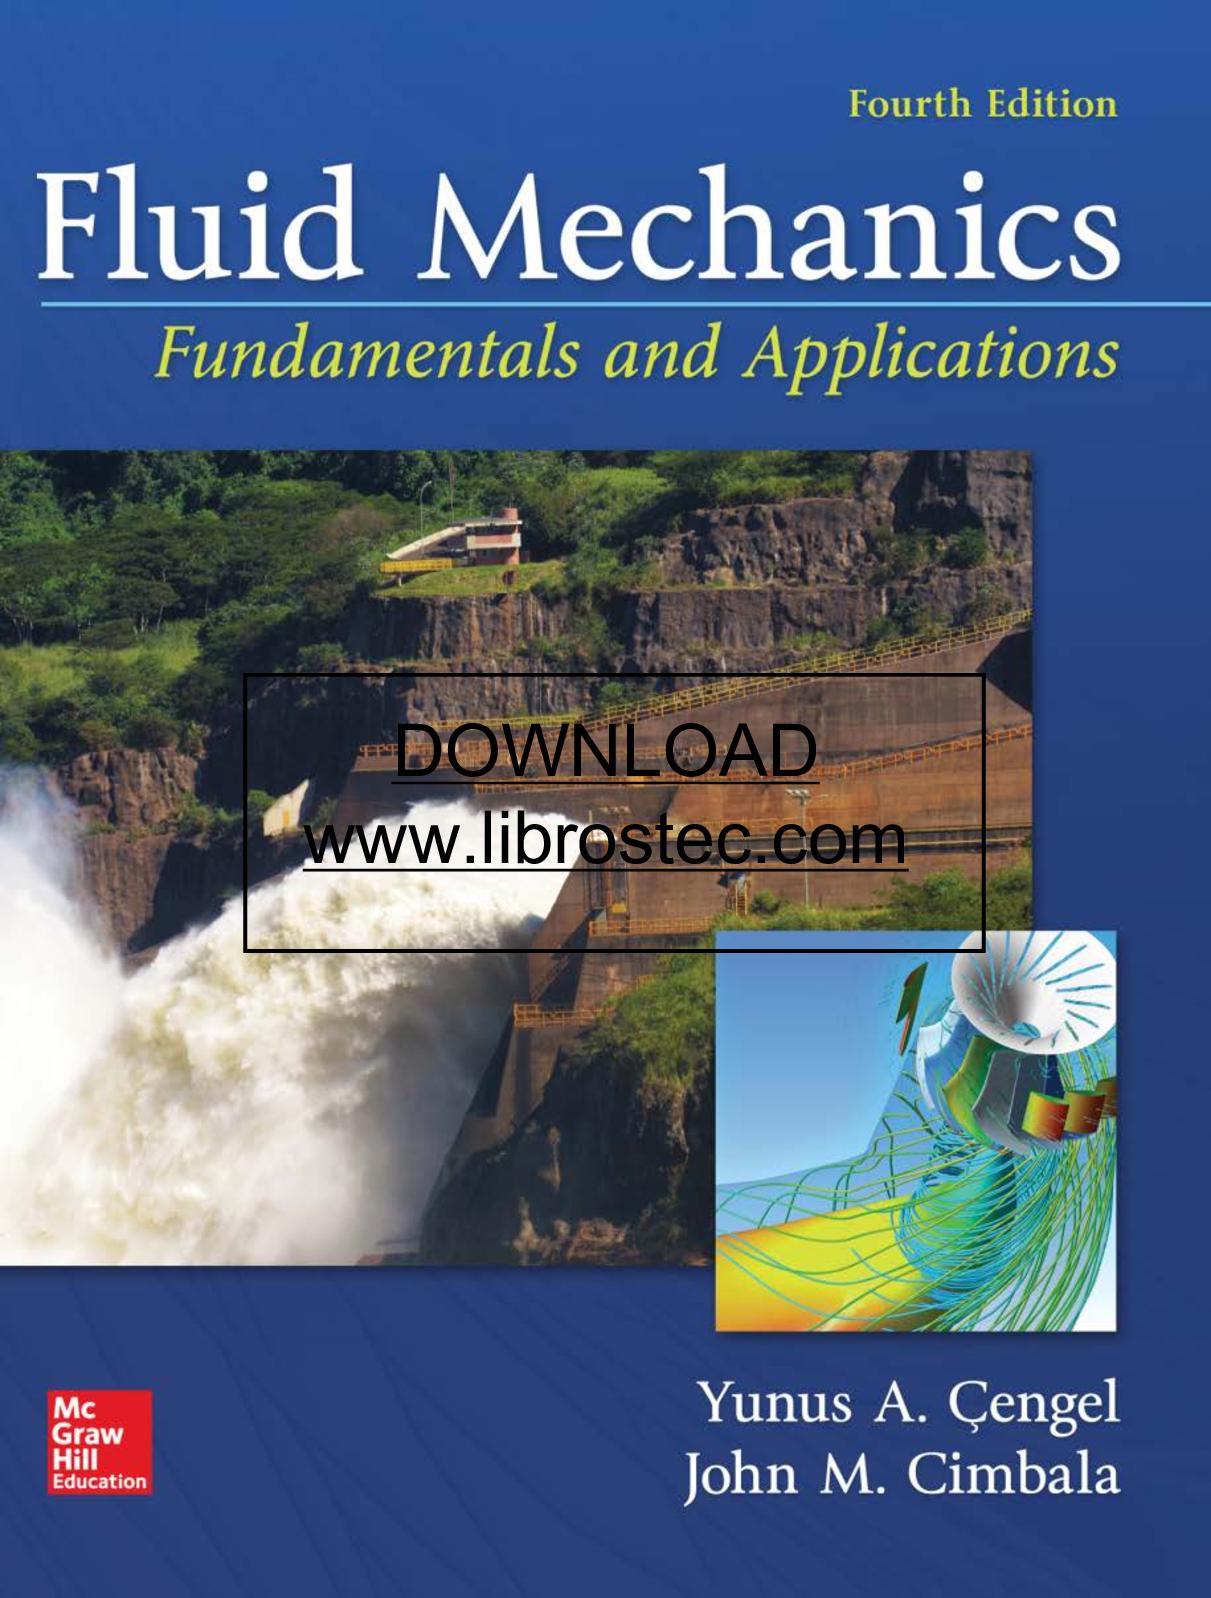 fluid-mechanics-fundamentals-and-applications-fourth-edition-author-yunus-a-cengel-john-m-cimbala-publisher-mcgraw-hill2021-07-25-062726.jpg